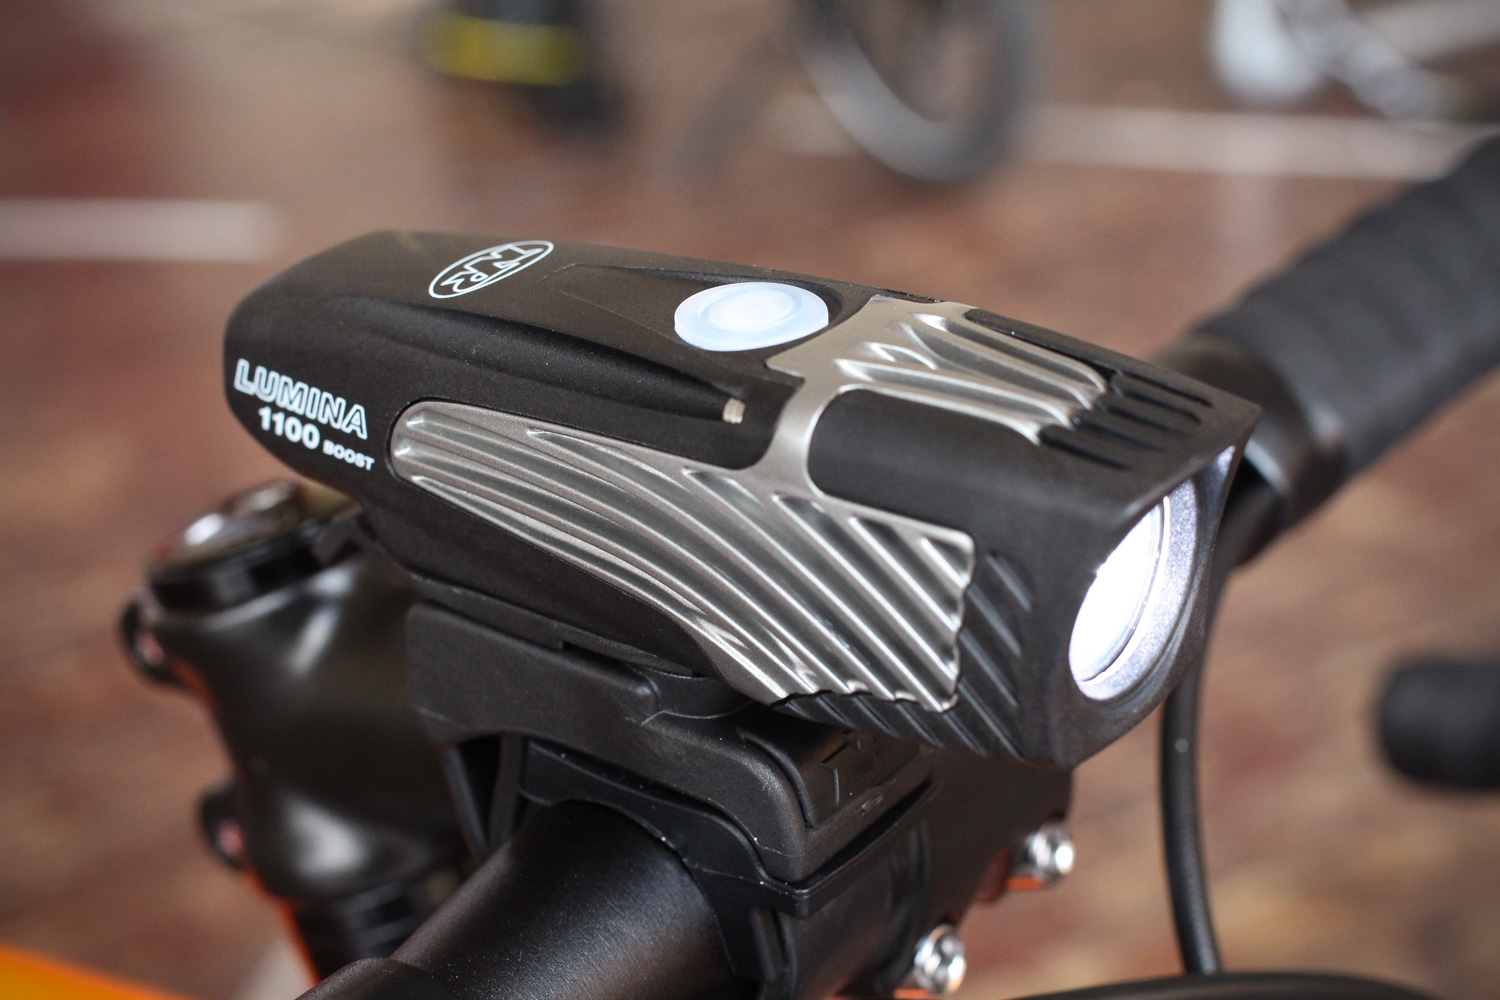 NiteRider Lumina 1100 Boost Headlight Bike Light Lumen Solas 100 Taillight USB 